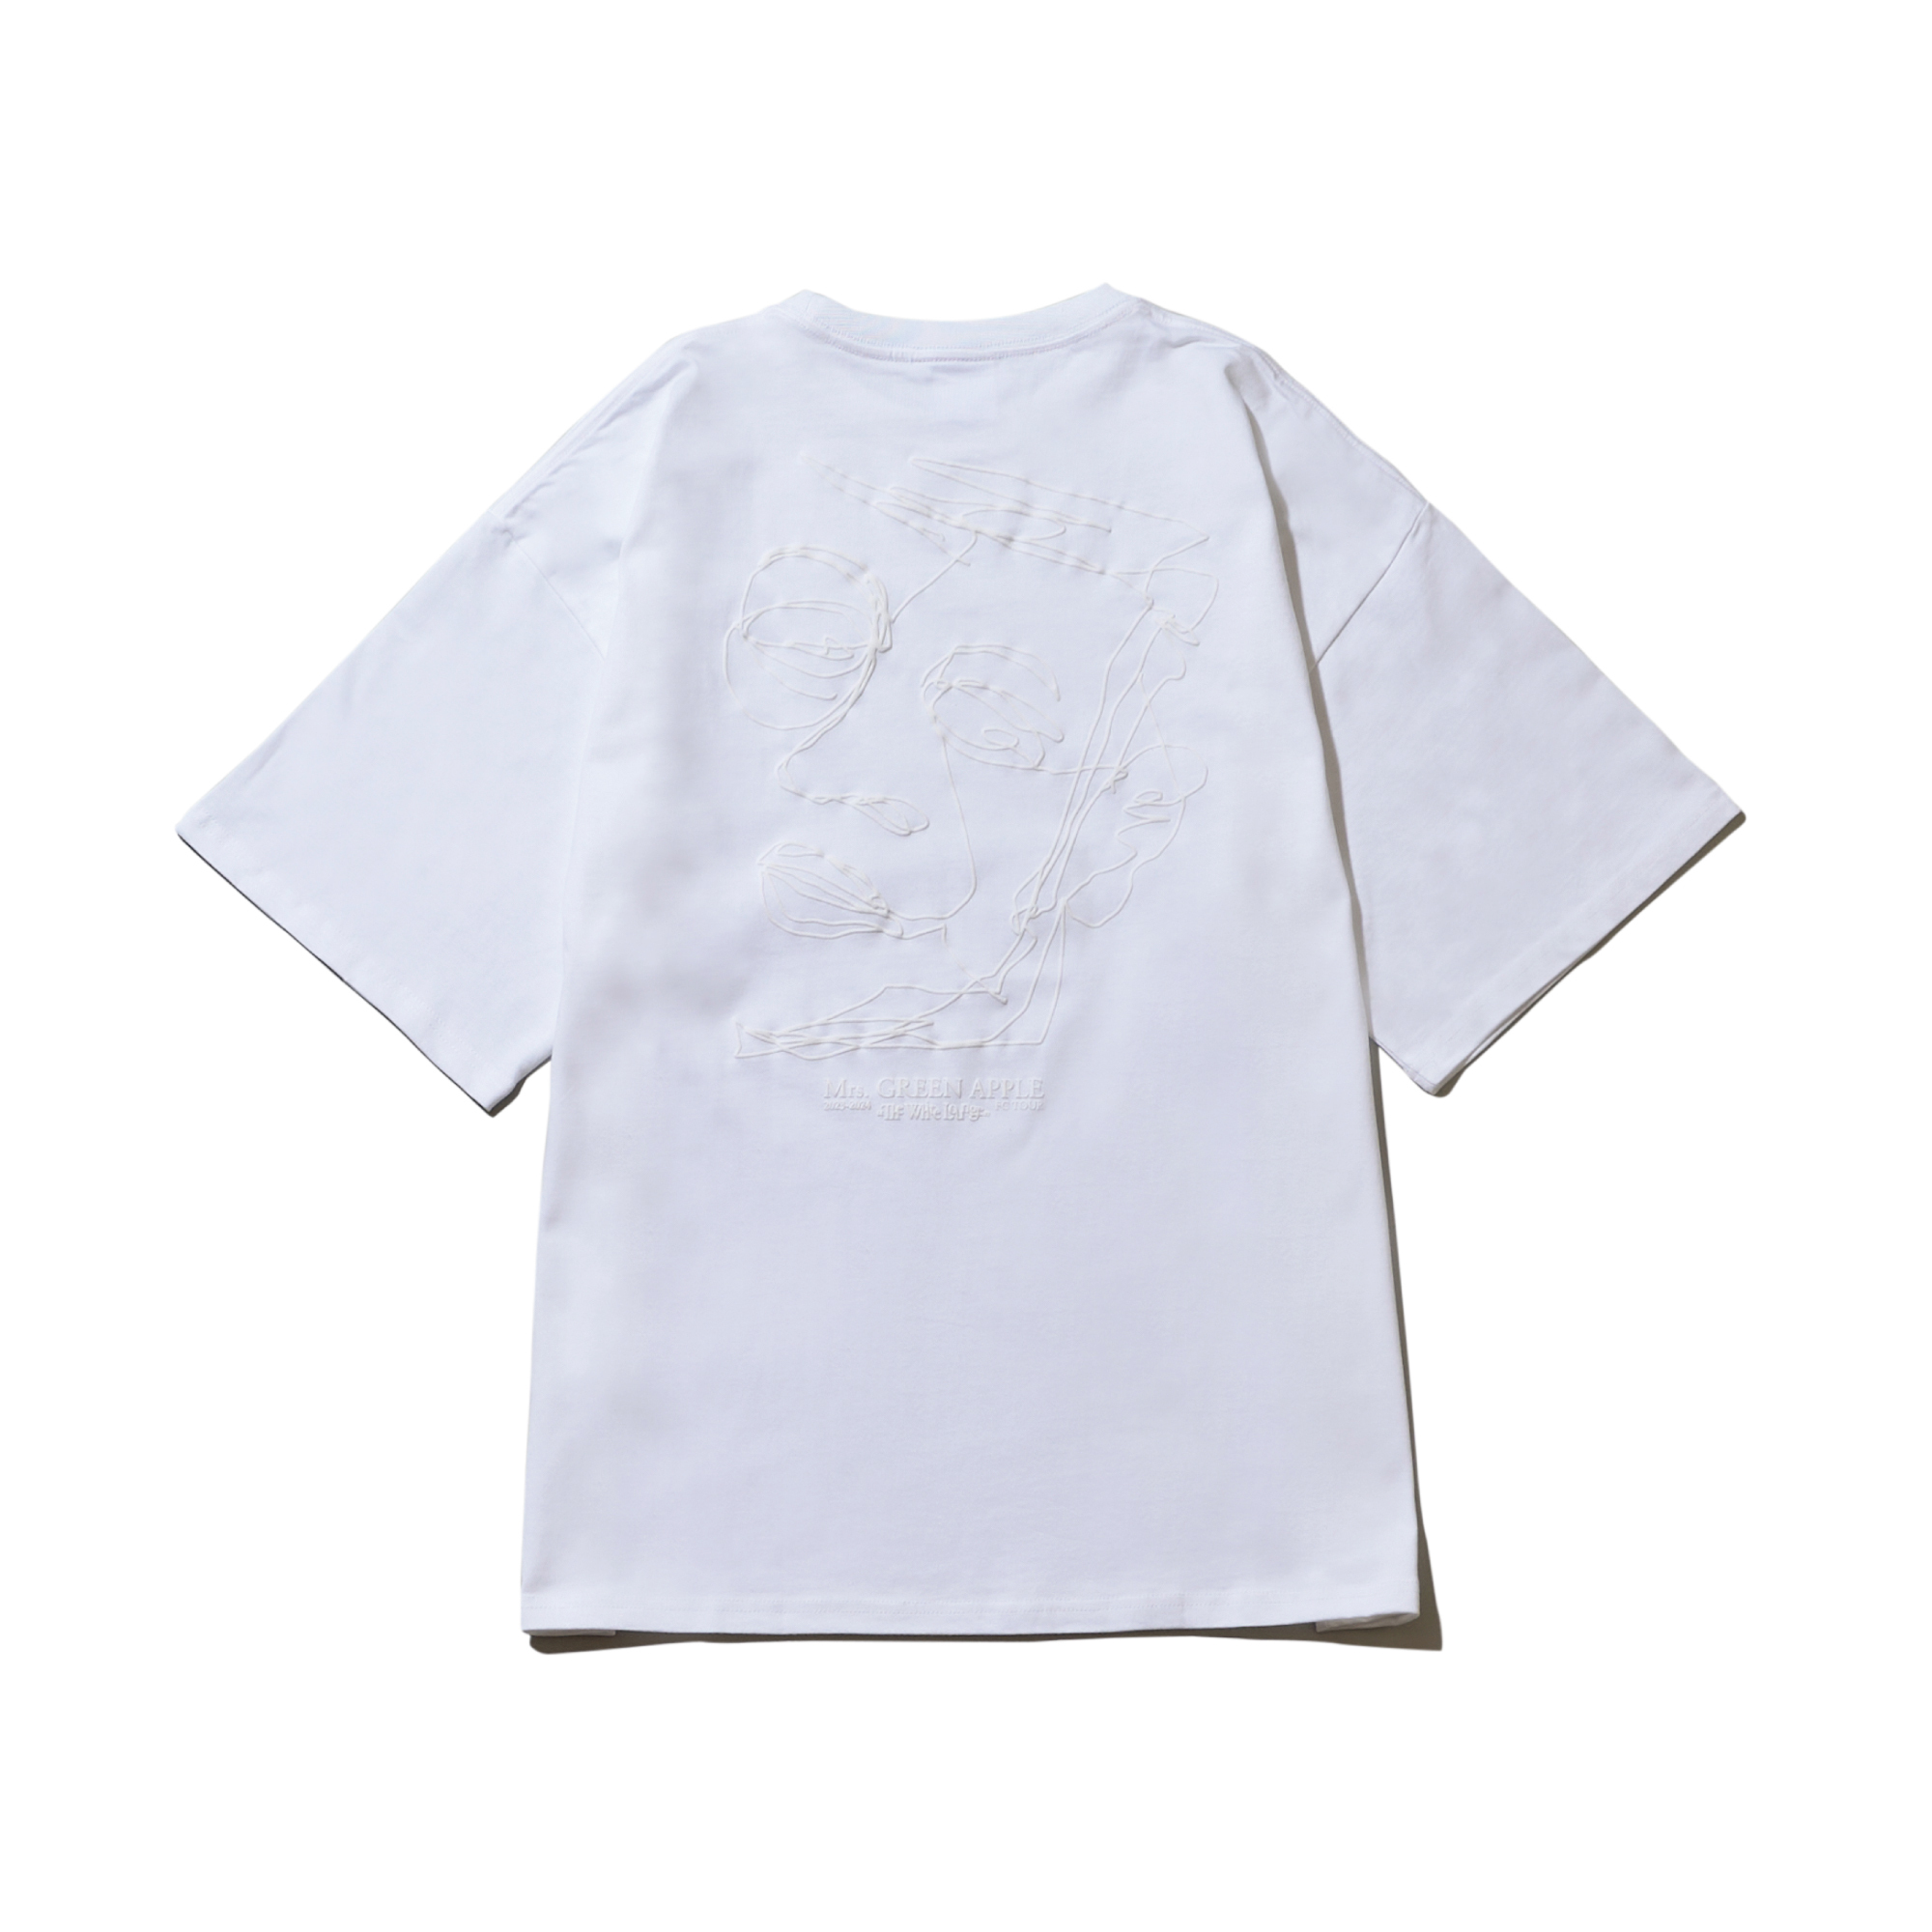 Atlantis T-shirt [White]